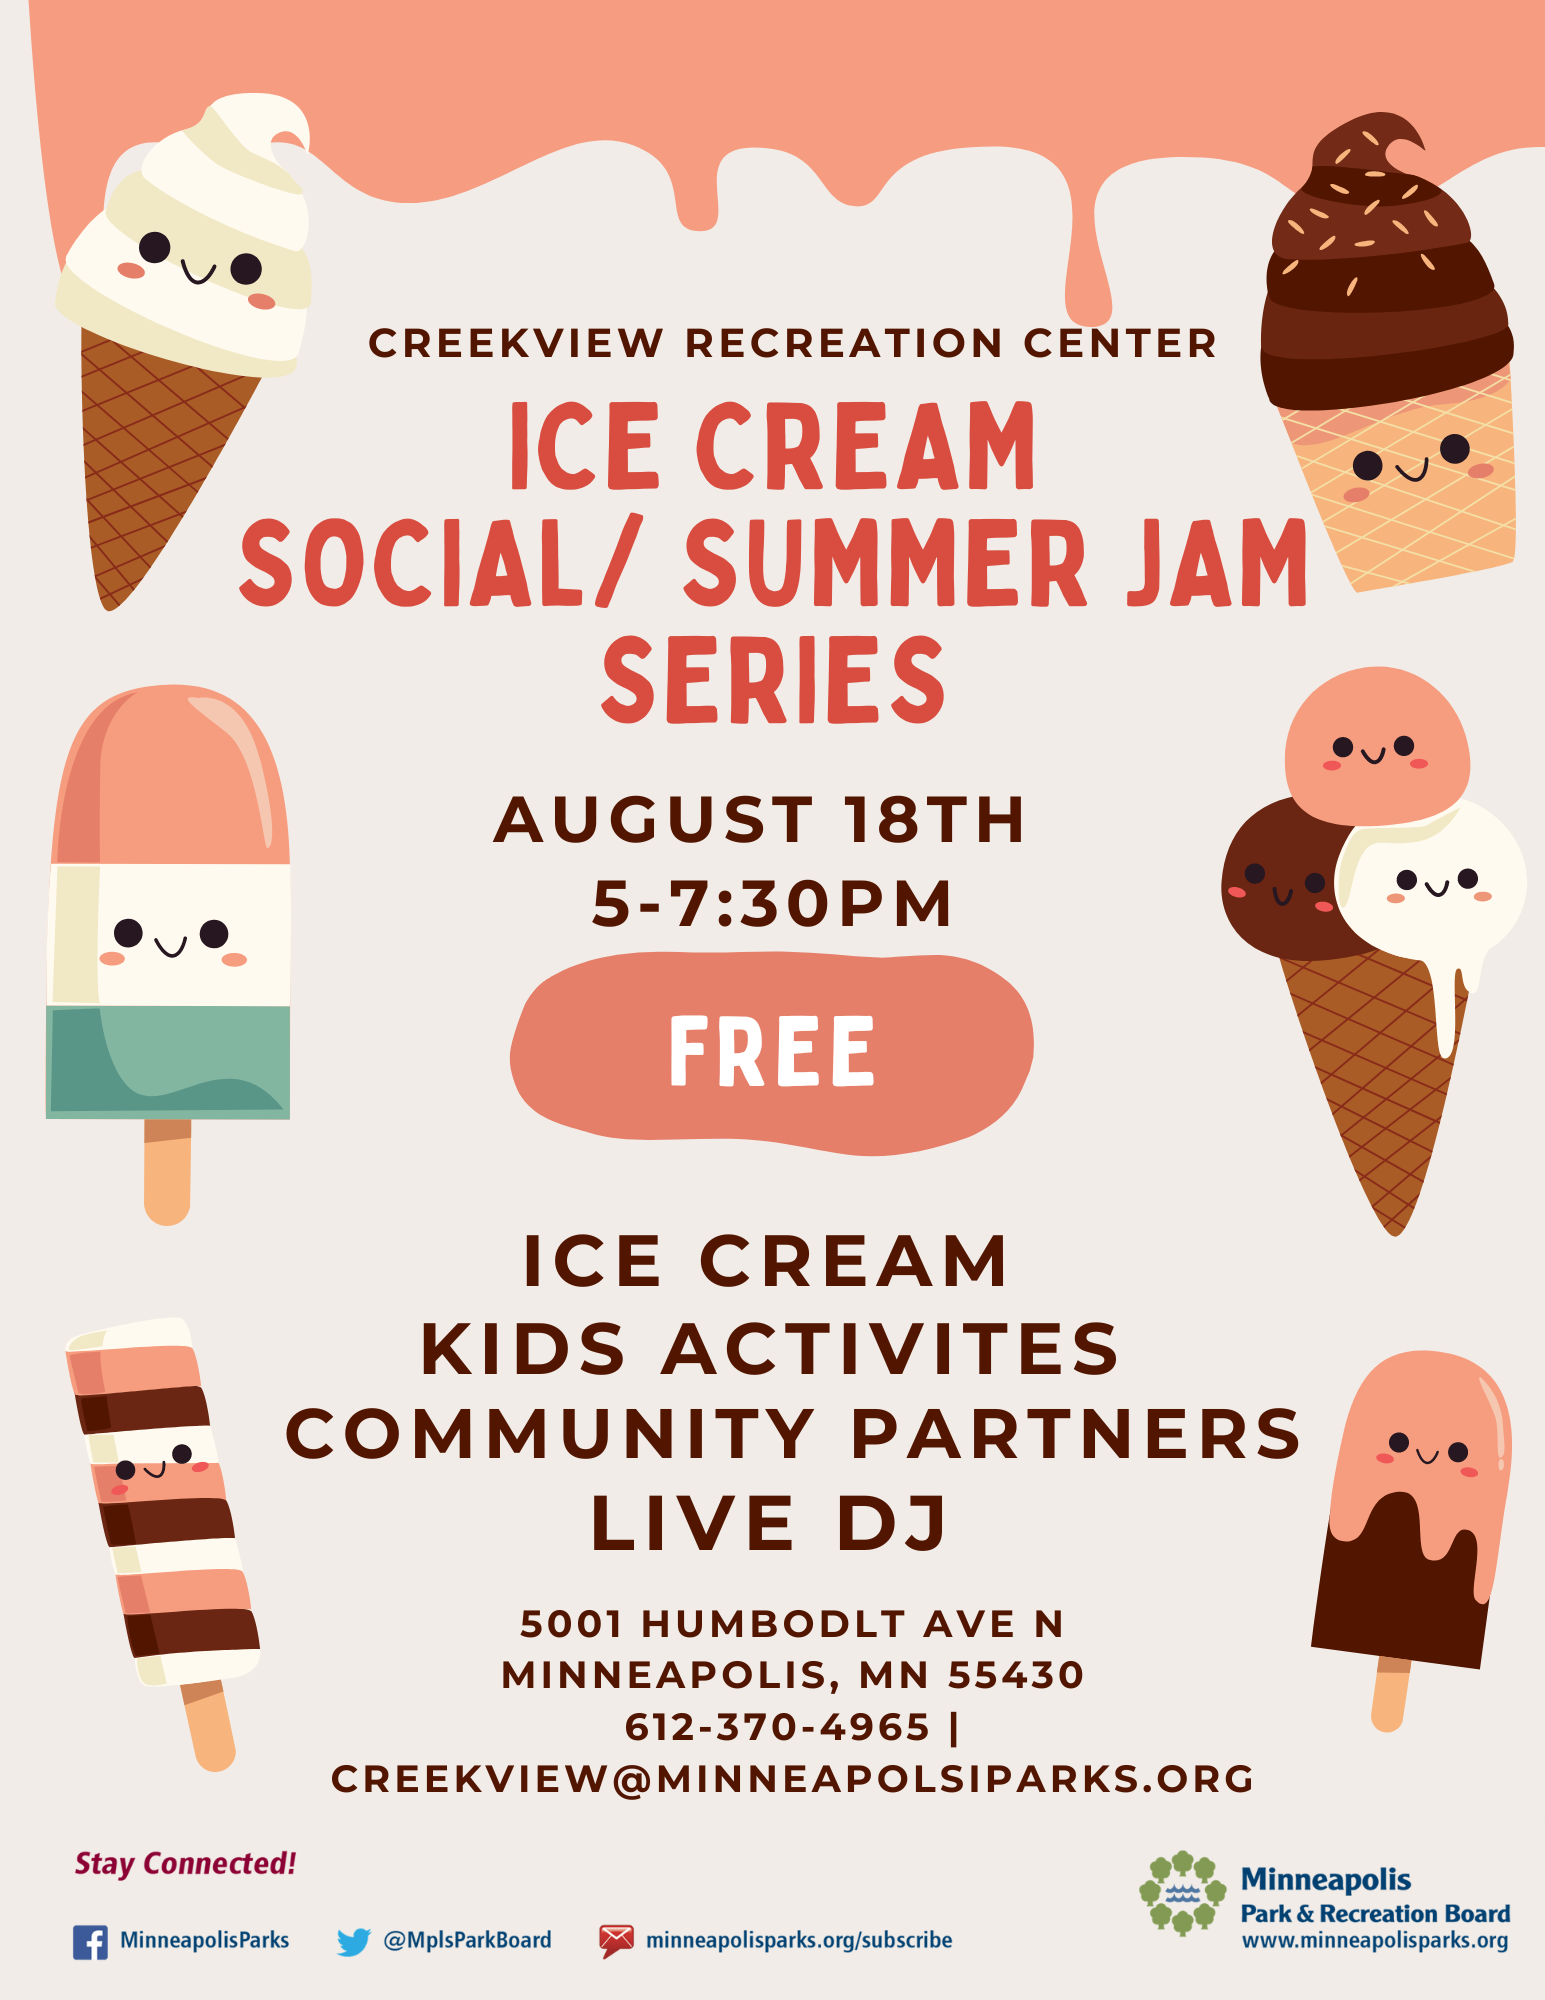 Creekview Recreation Center Ice Cream Social / Summer Jam Series poster